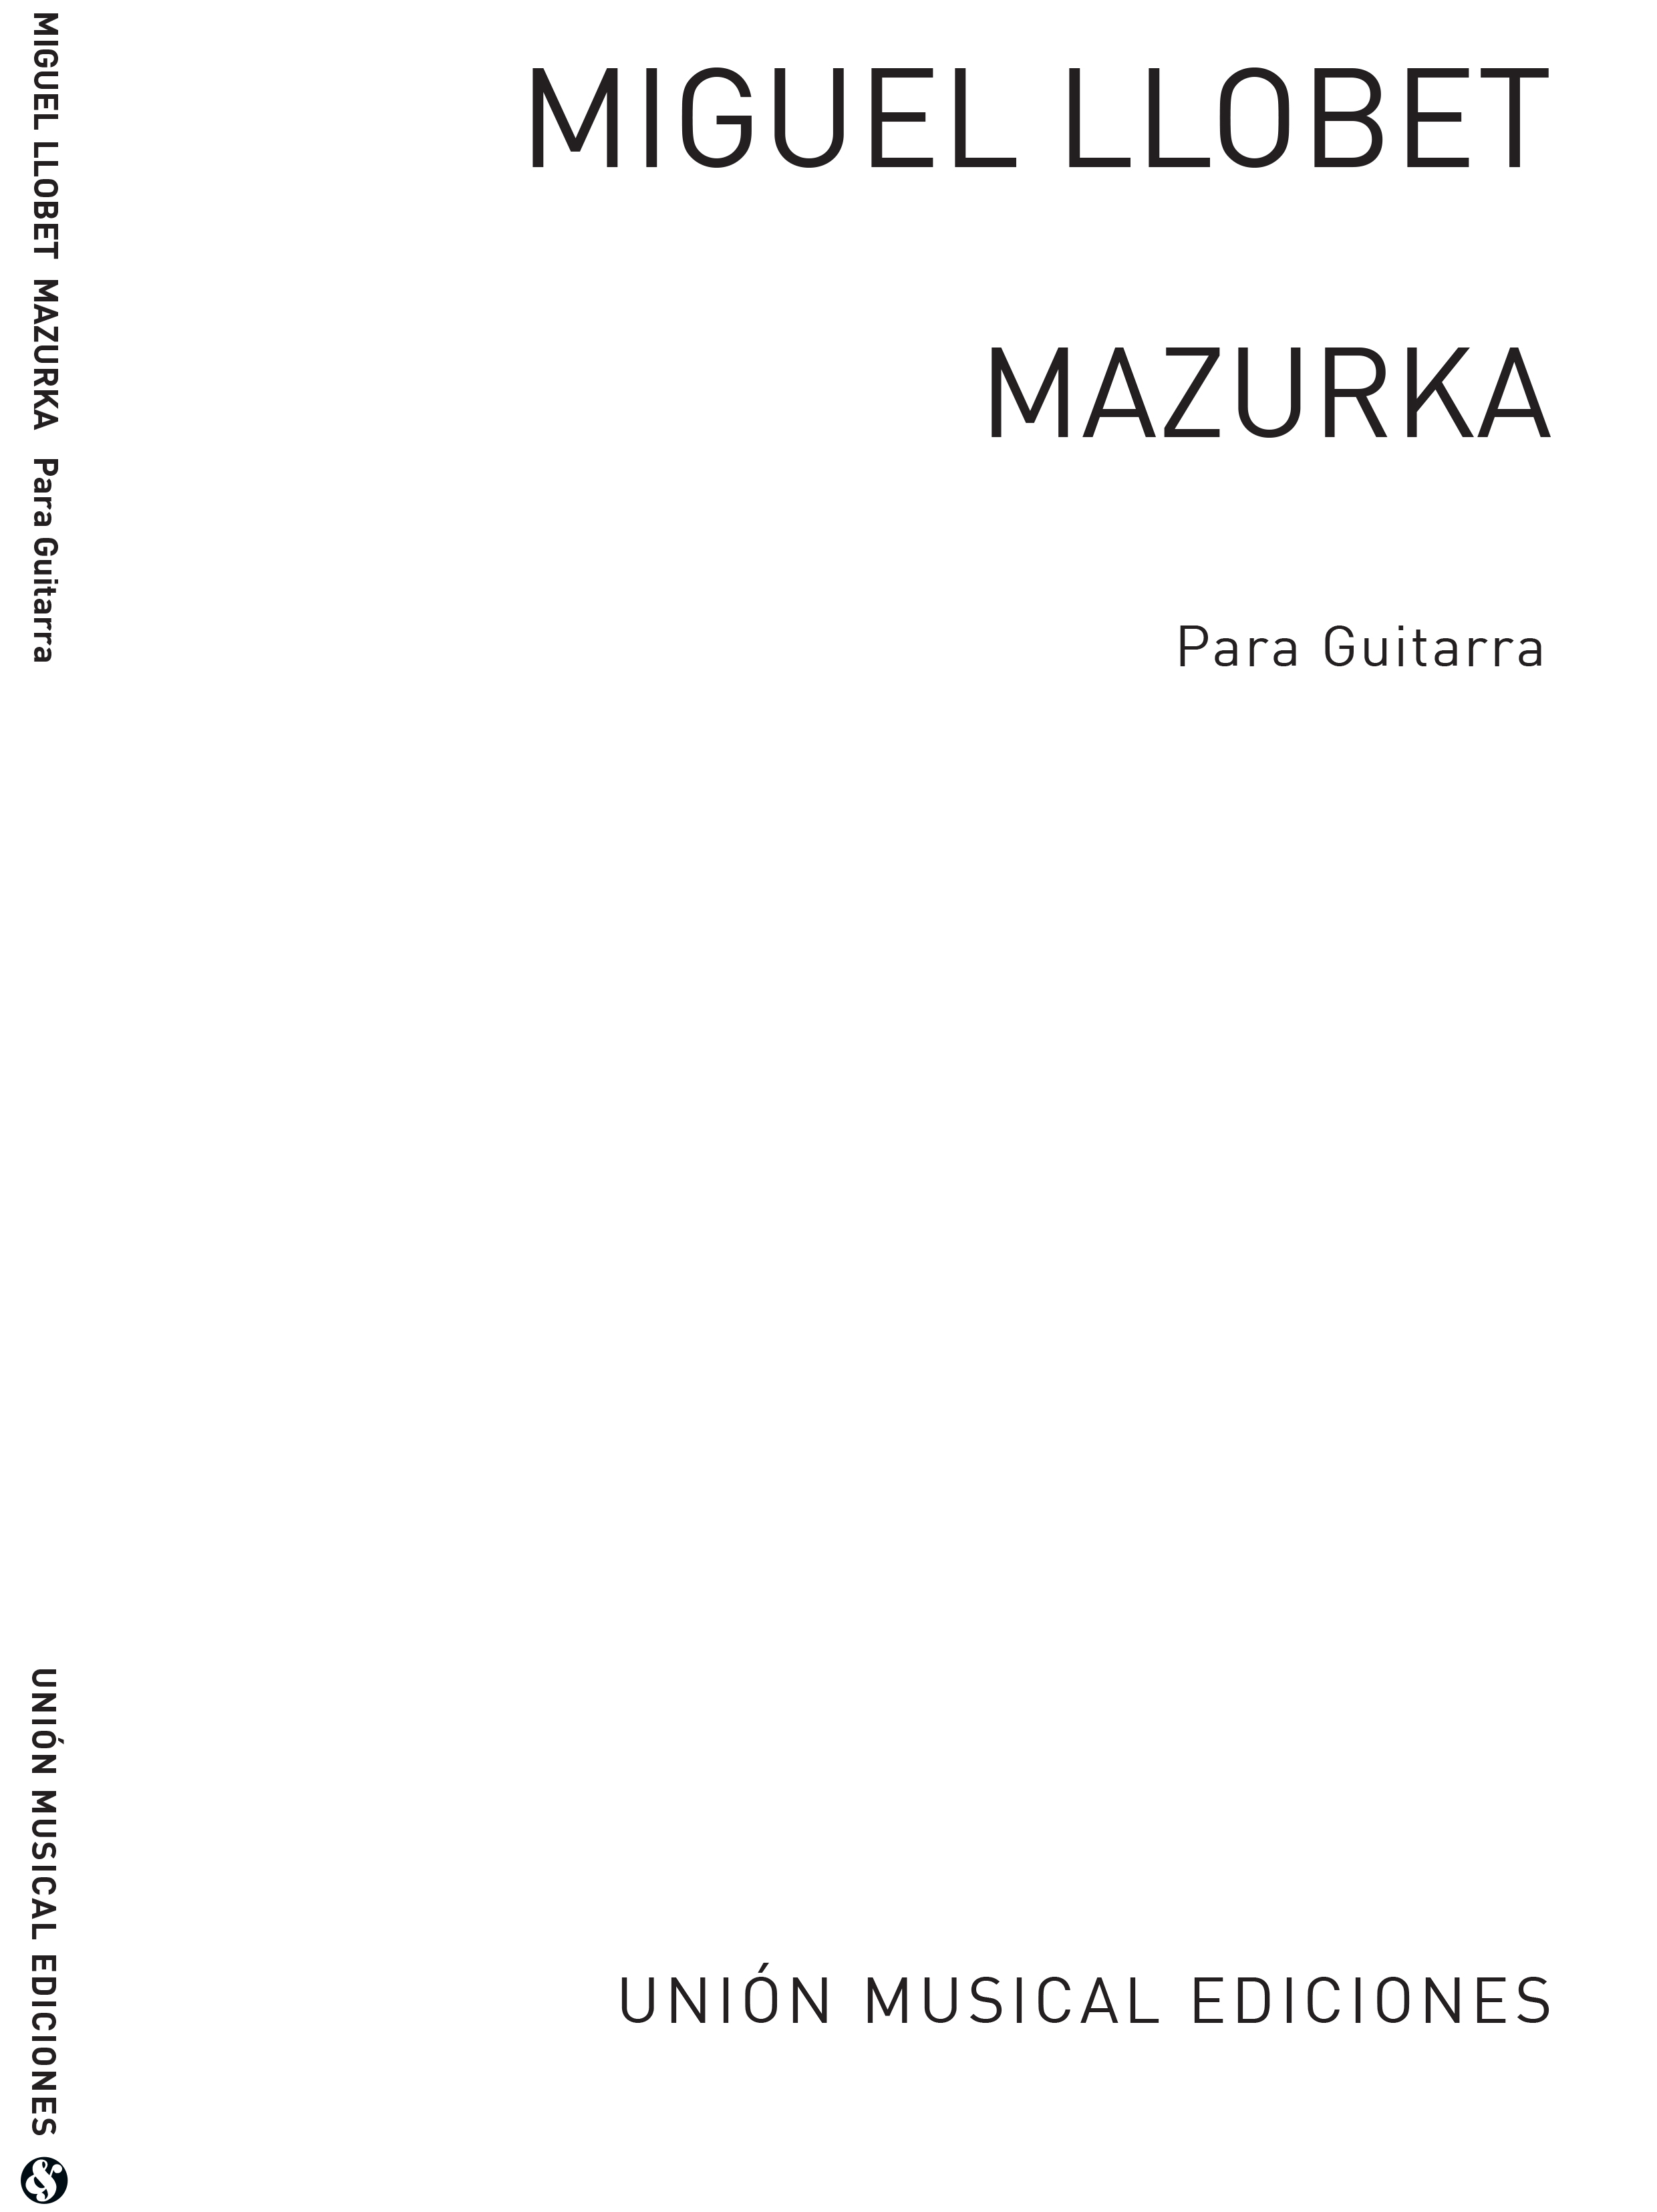 Miguel Llobet: Mazurka for Guitar: Guitar: Instrumental Work